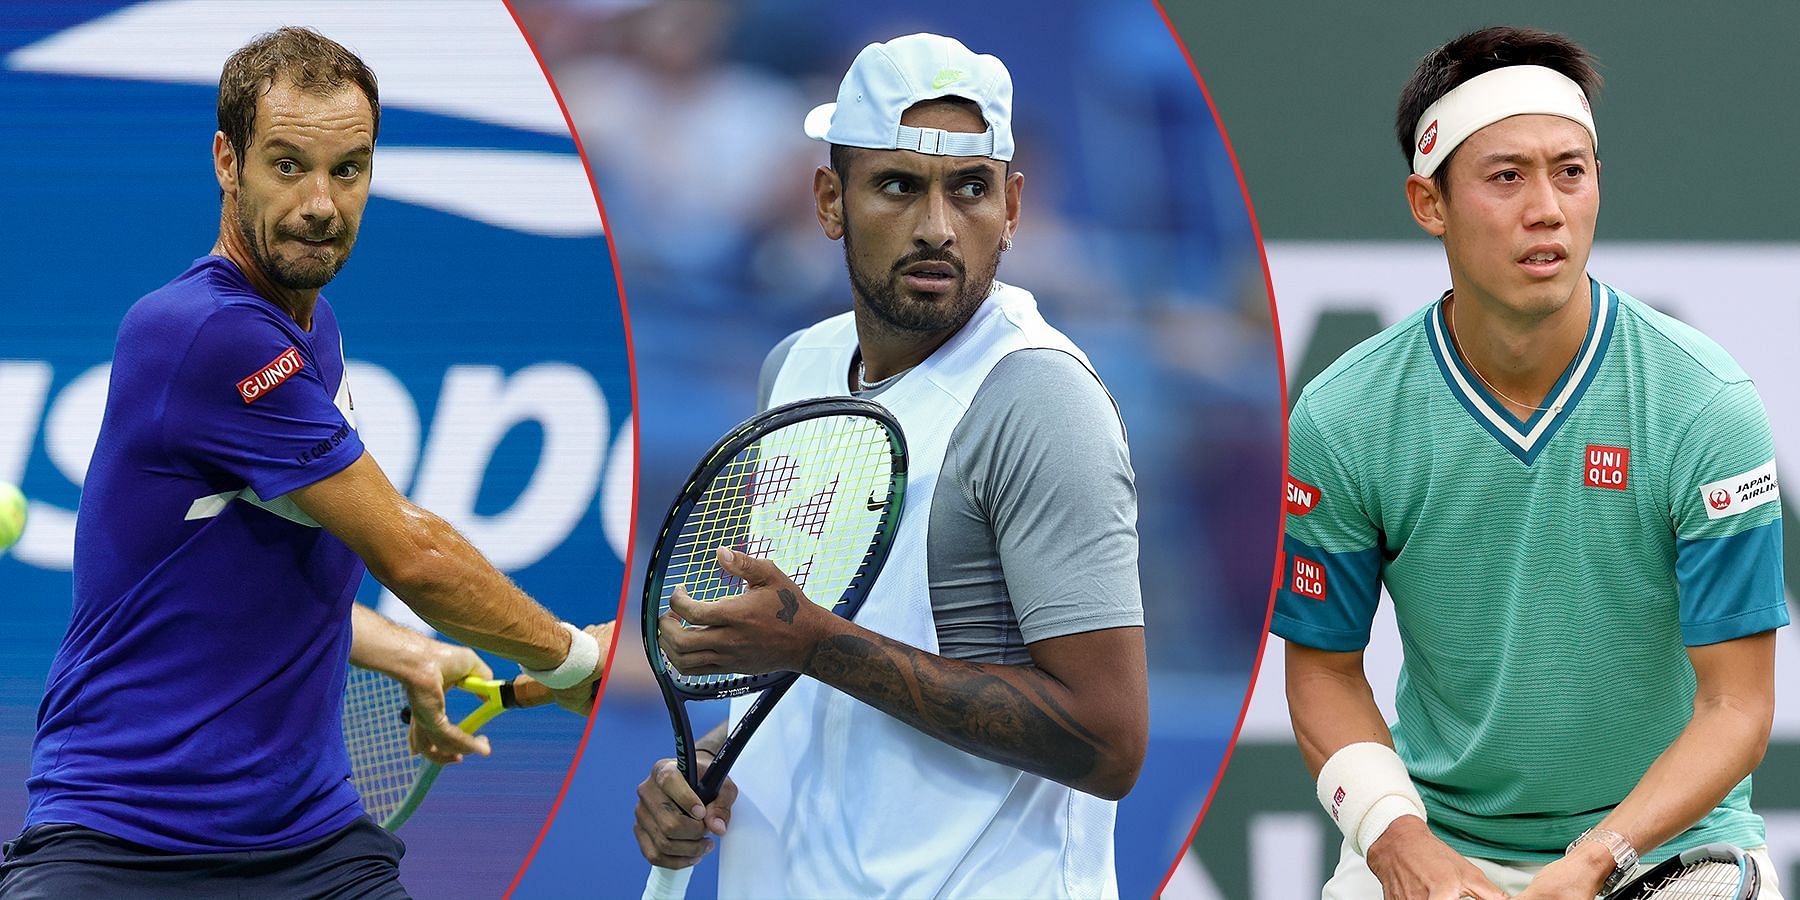 Richard Gasquet, Nick Kyrgios, and Kei Nishikori have yet to win a Grand Slam despite their prowess